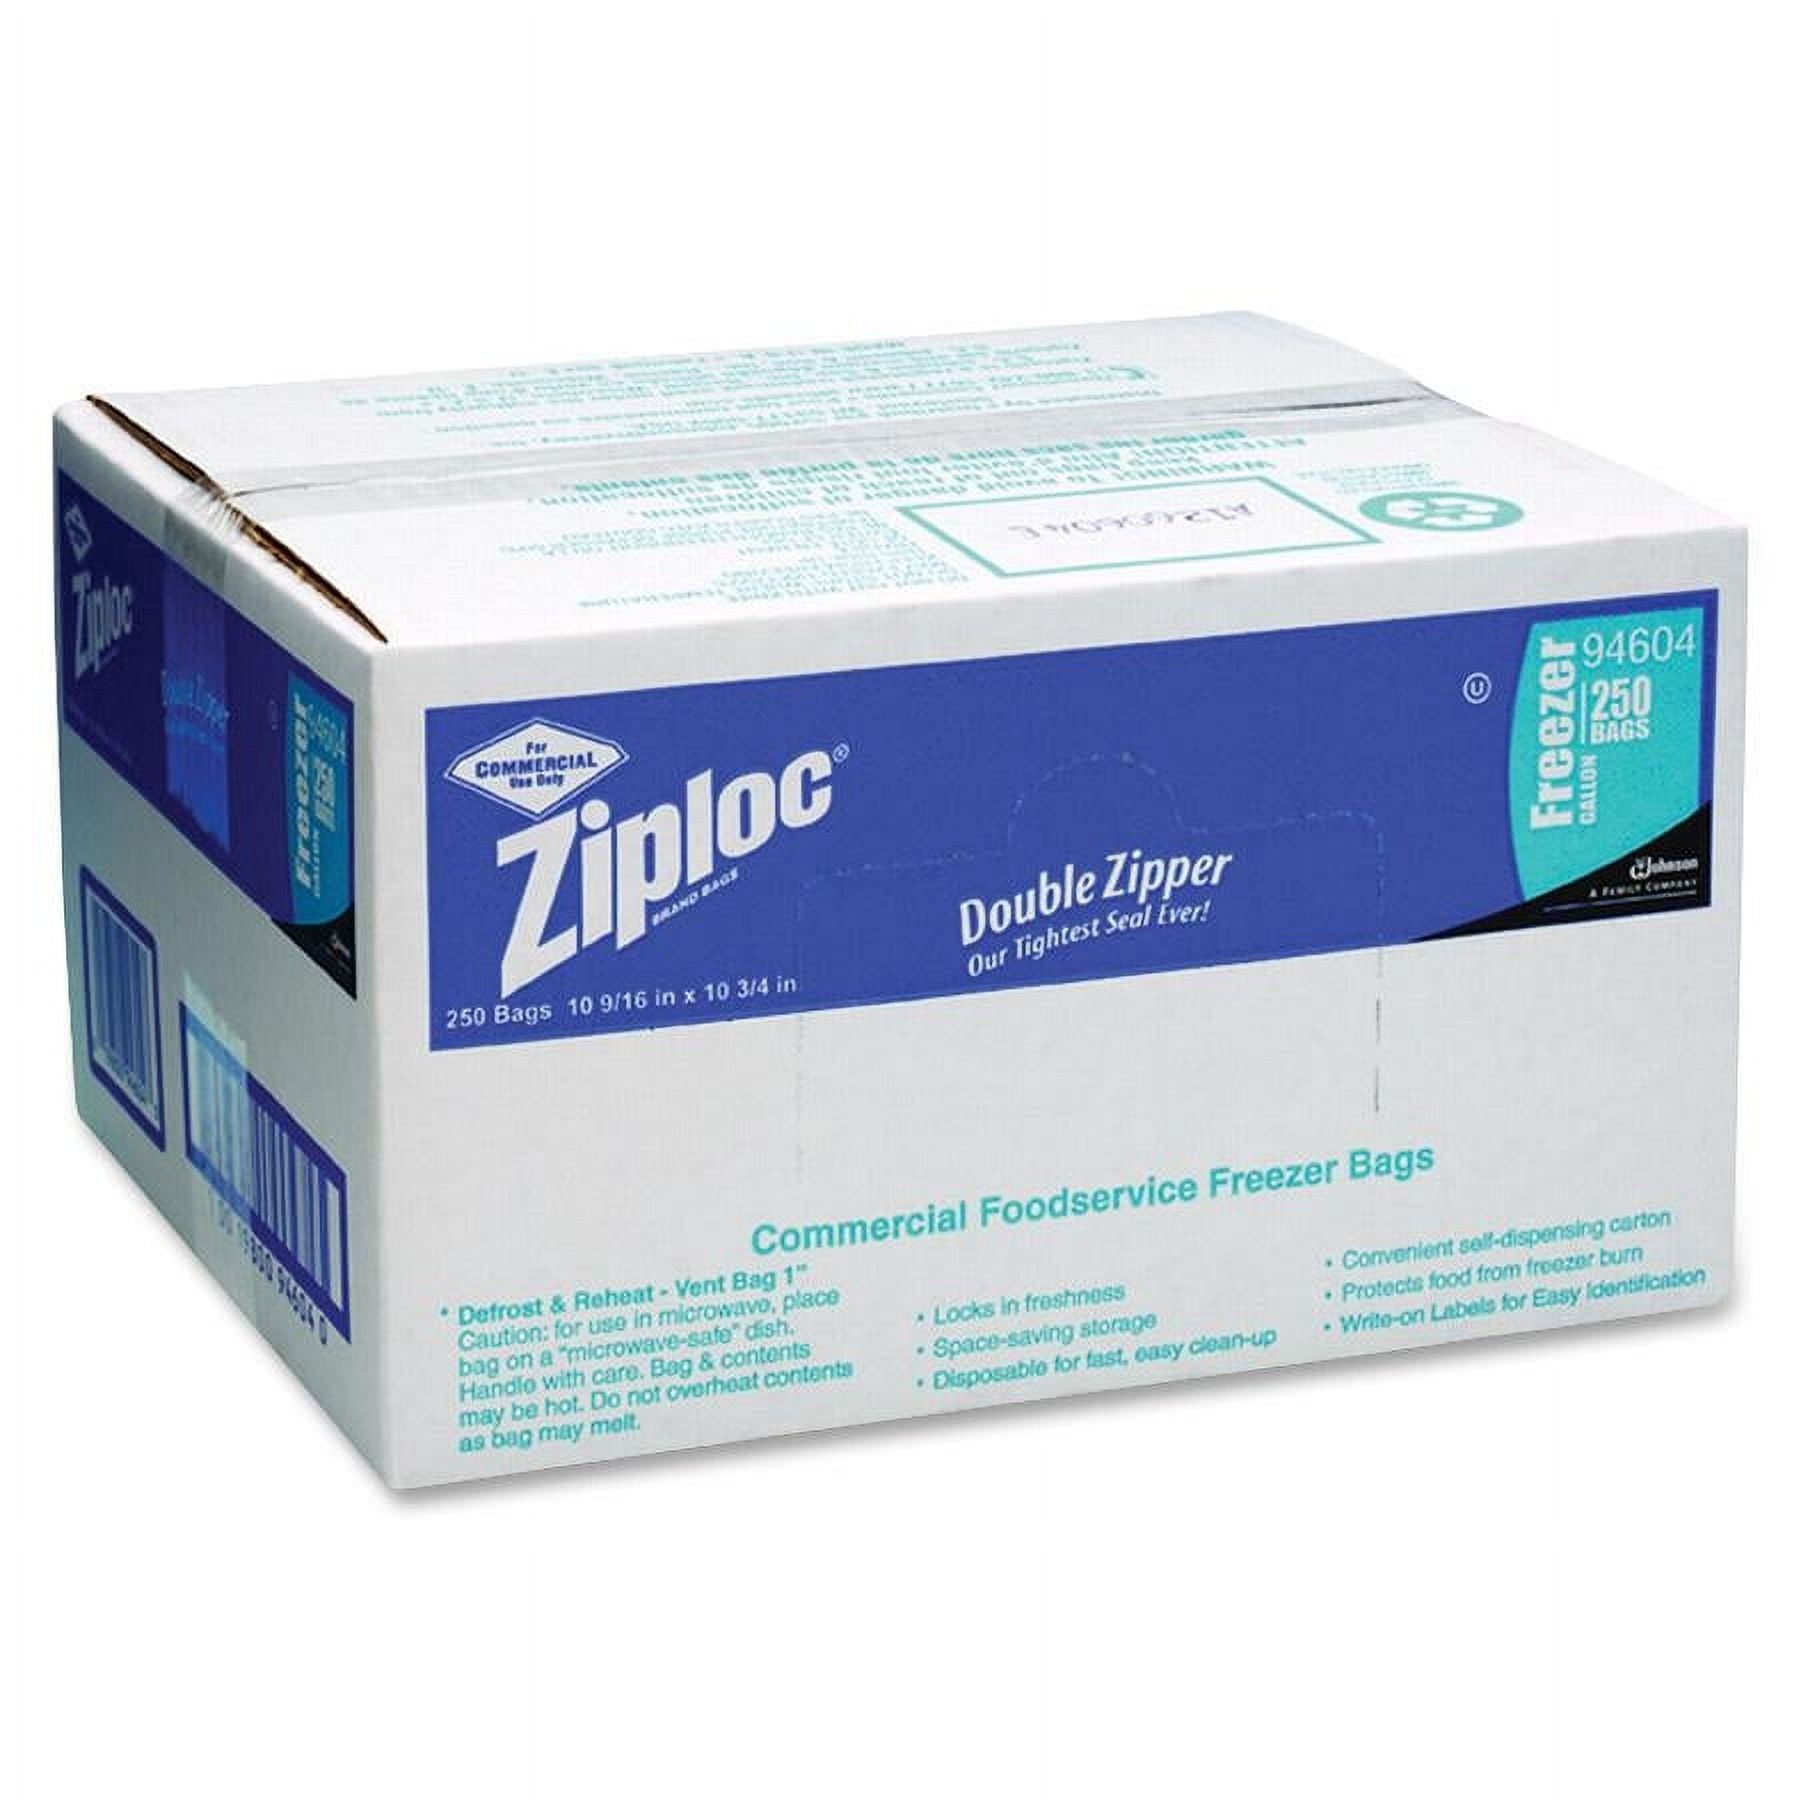 Ziploc® Two-Gallon Freezer Bags w/ Double Zipper & Write-On Label - 100/Case